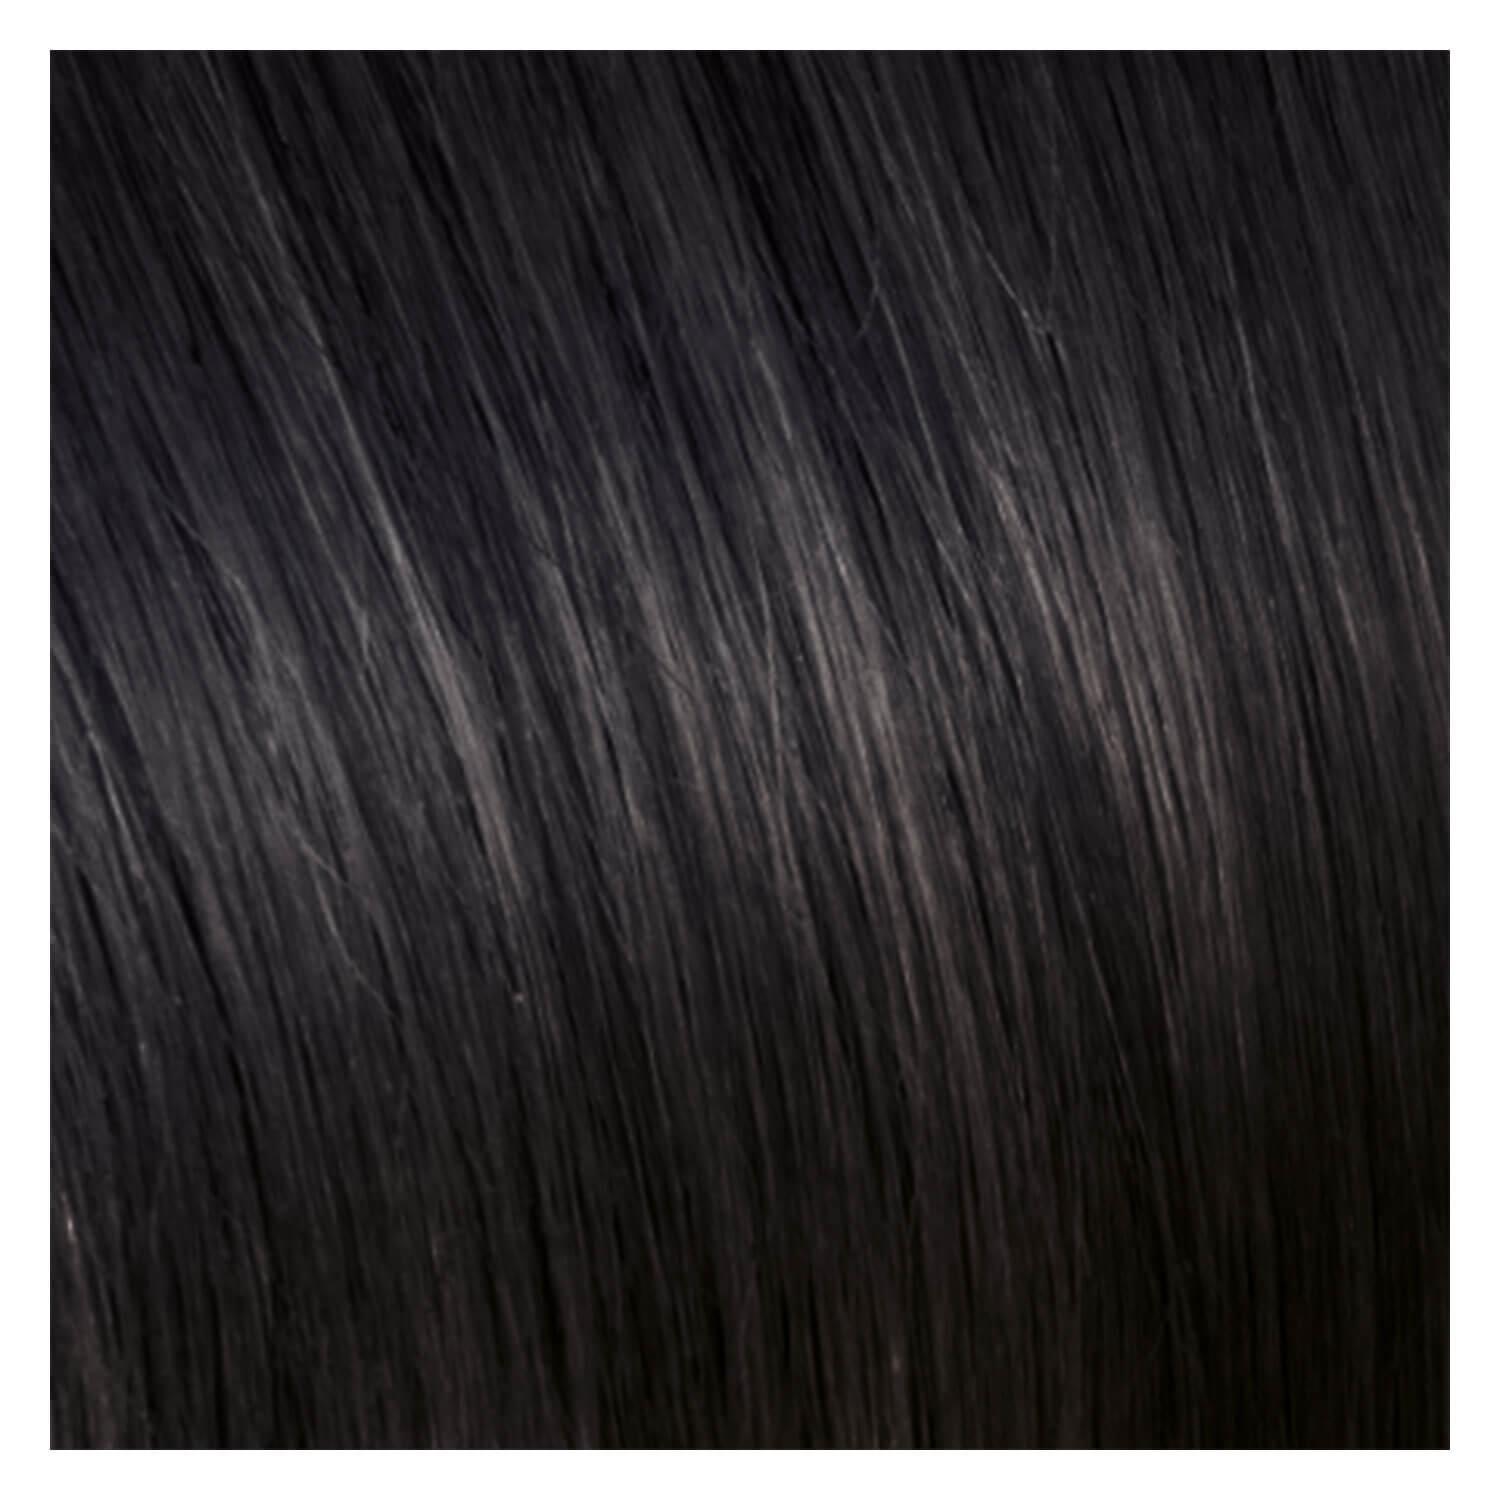 SHE Flip In-System Hair Extensions - 2 Dark Chestnut Brown 50/55cm